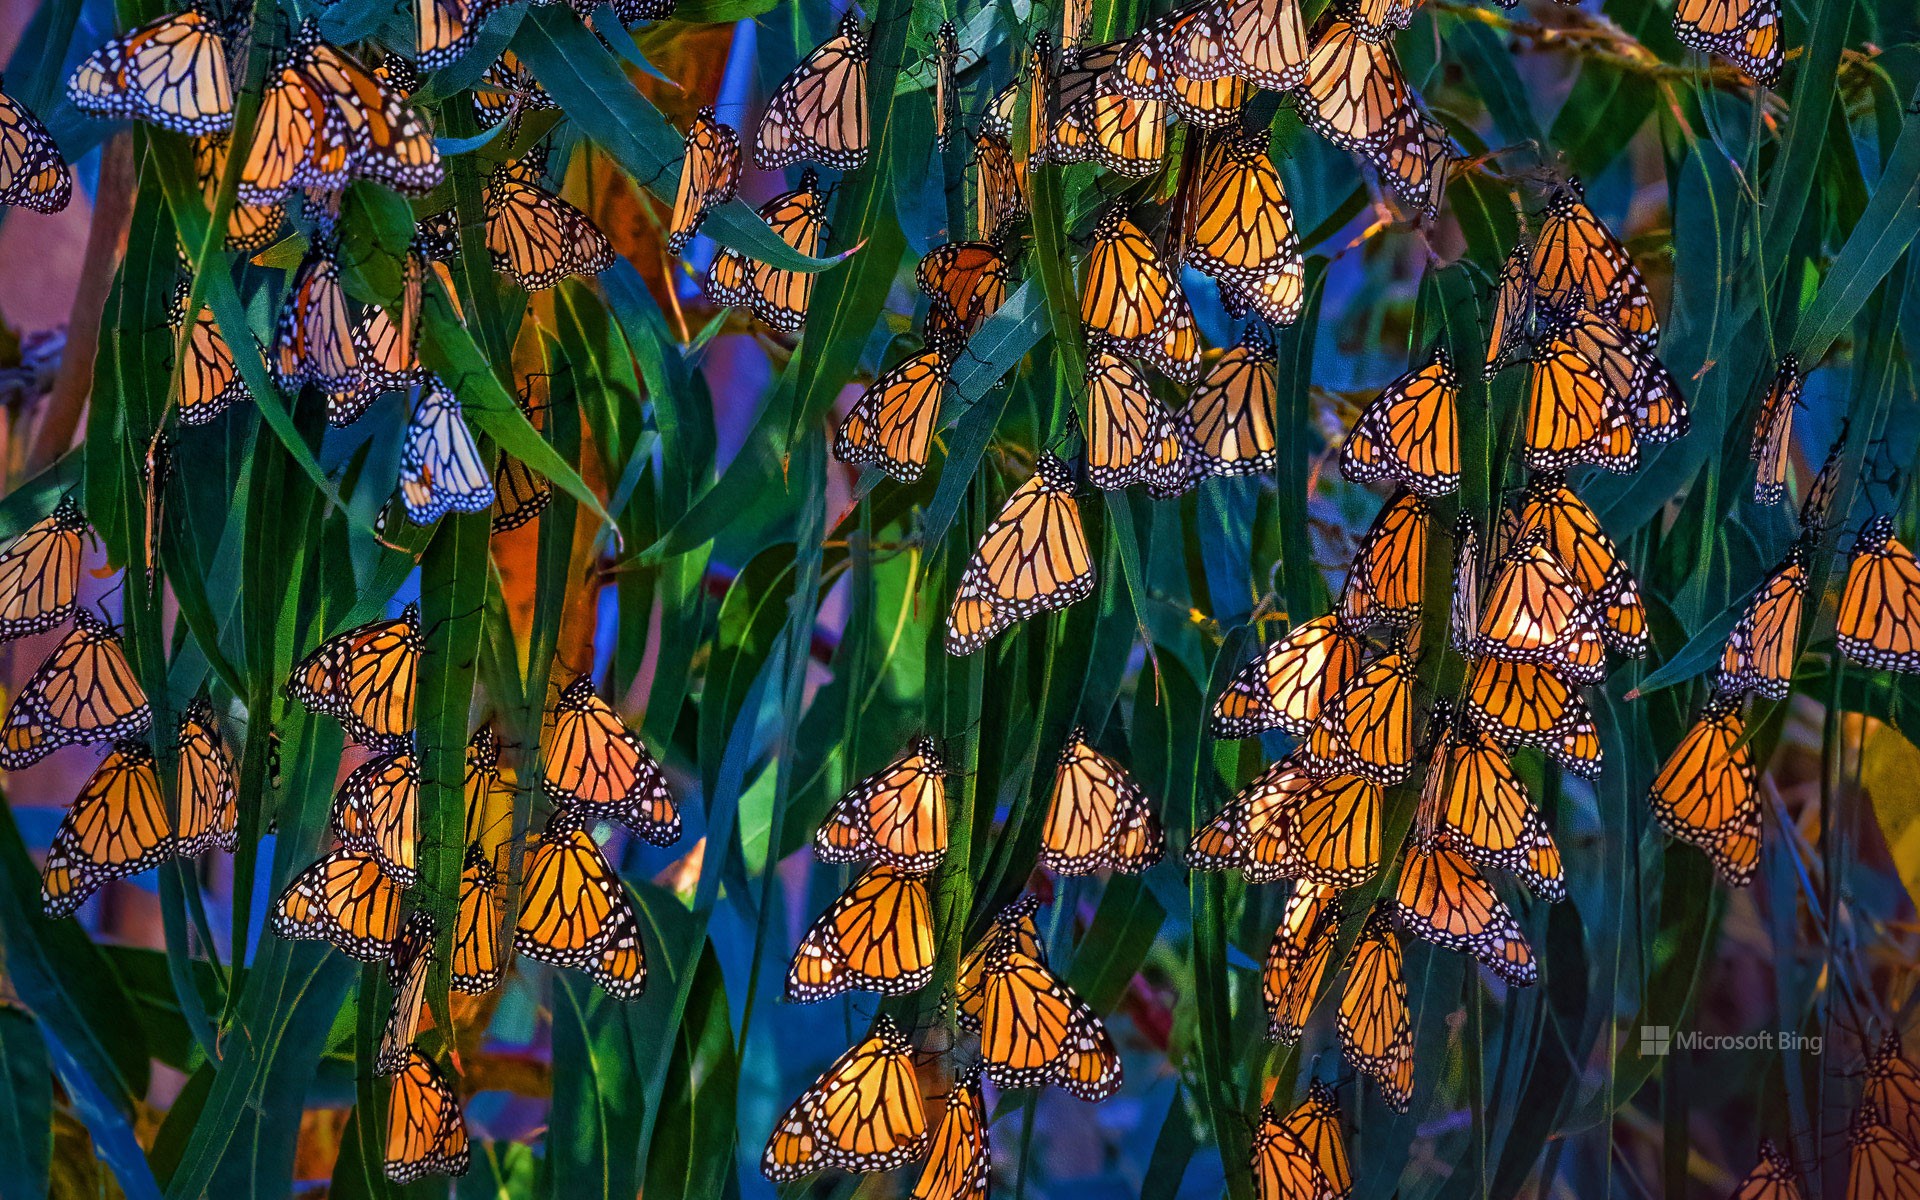 Monarch butterflies at Pismo Beach, California, USA